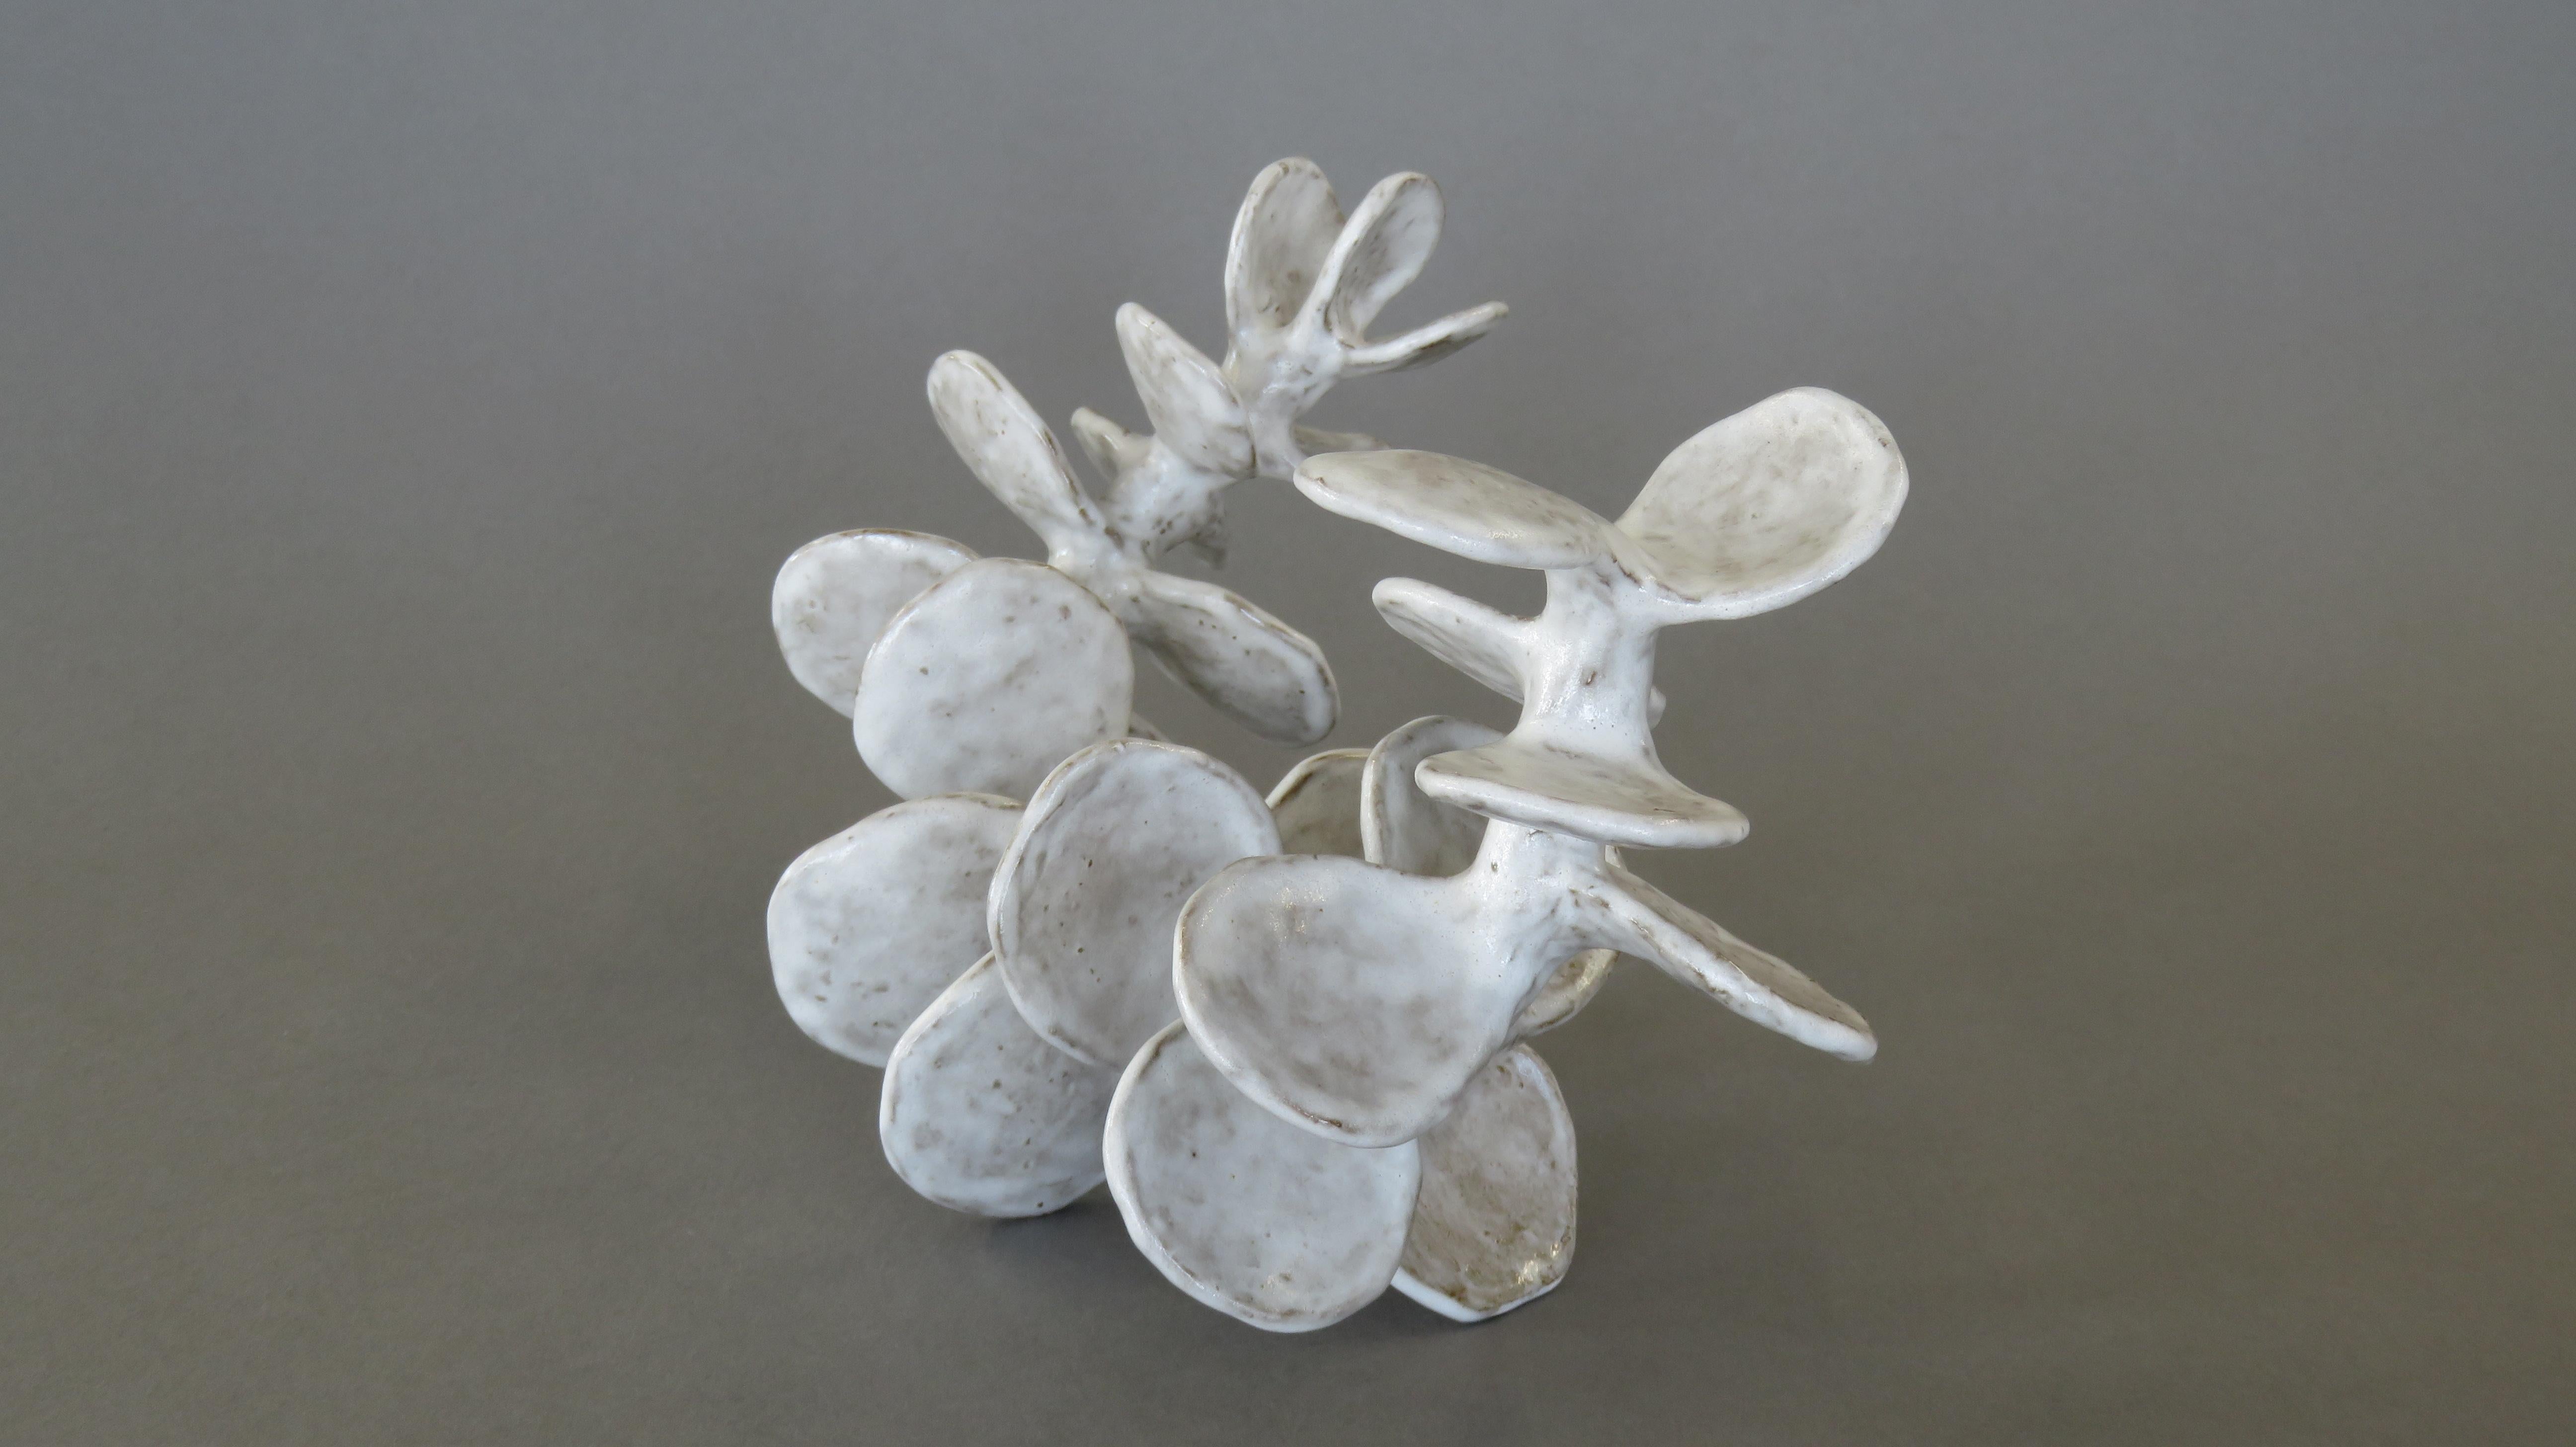 Handgefertigte Keramik-Skulptur:: Liegende Skelett-Wirbelsäule in gesprenkeltem Weiß 2